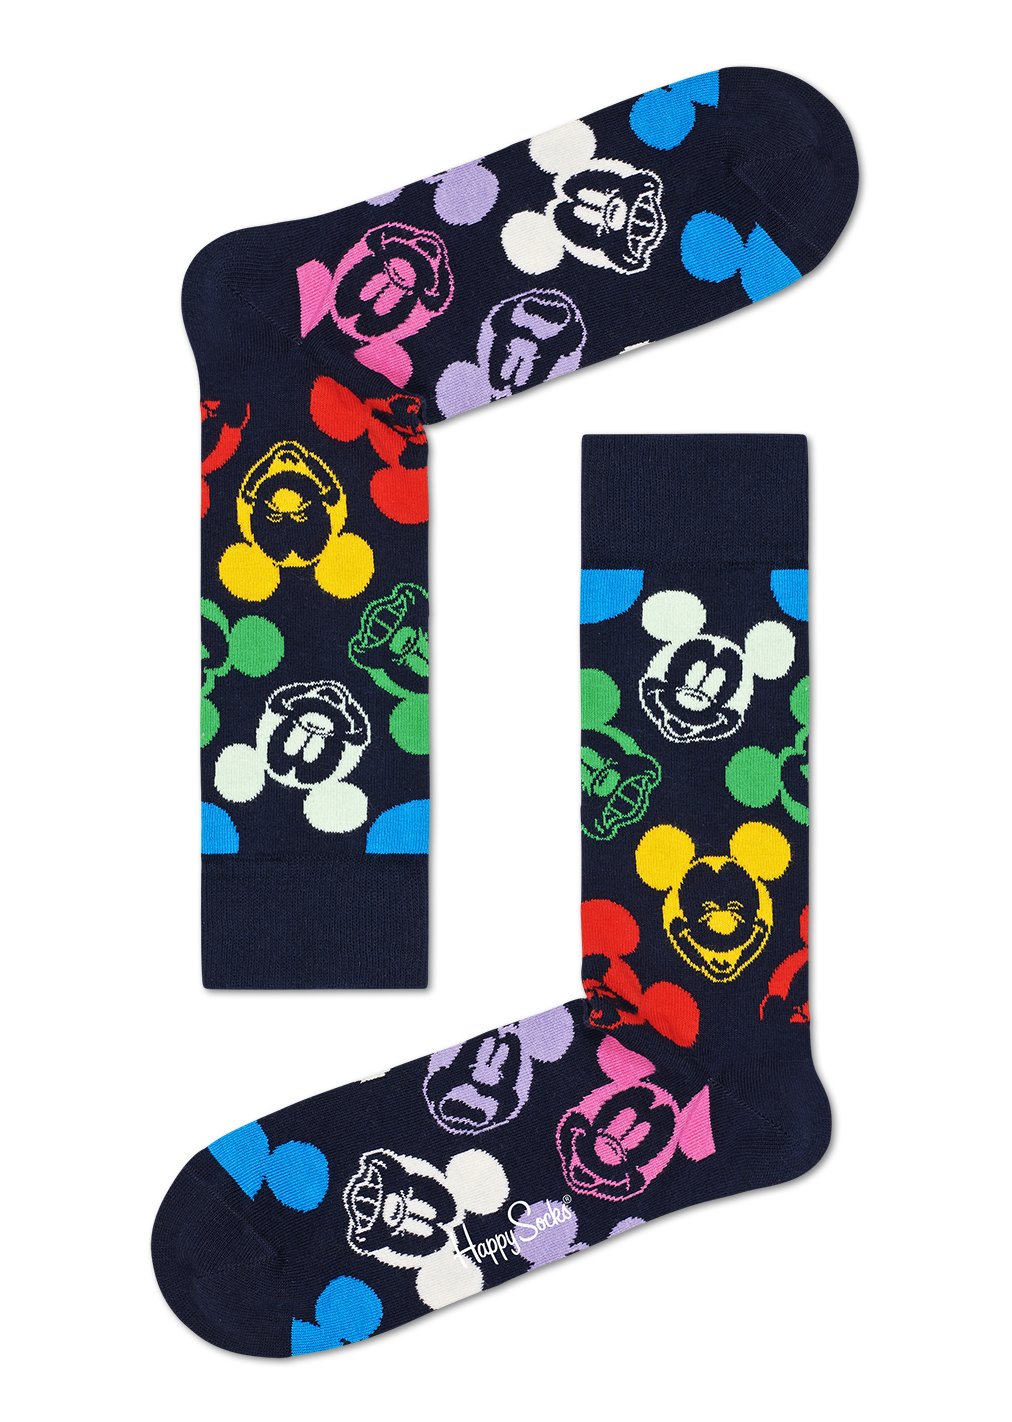 Happy Socks Disney Gift Set 2-Pack